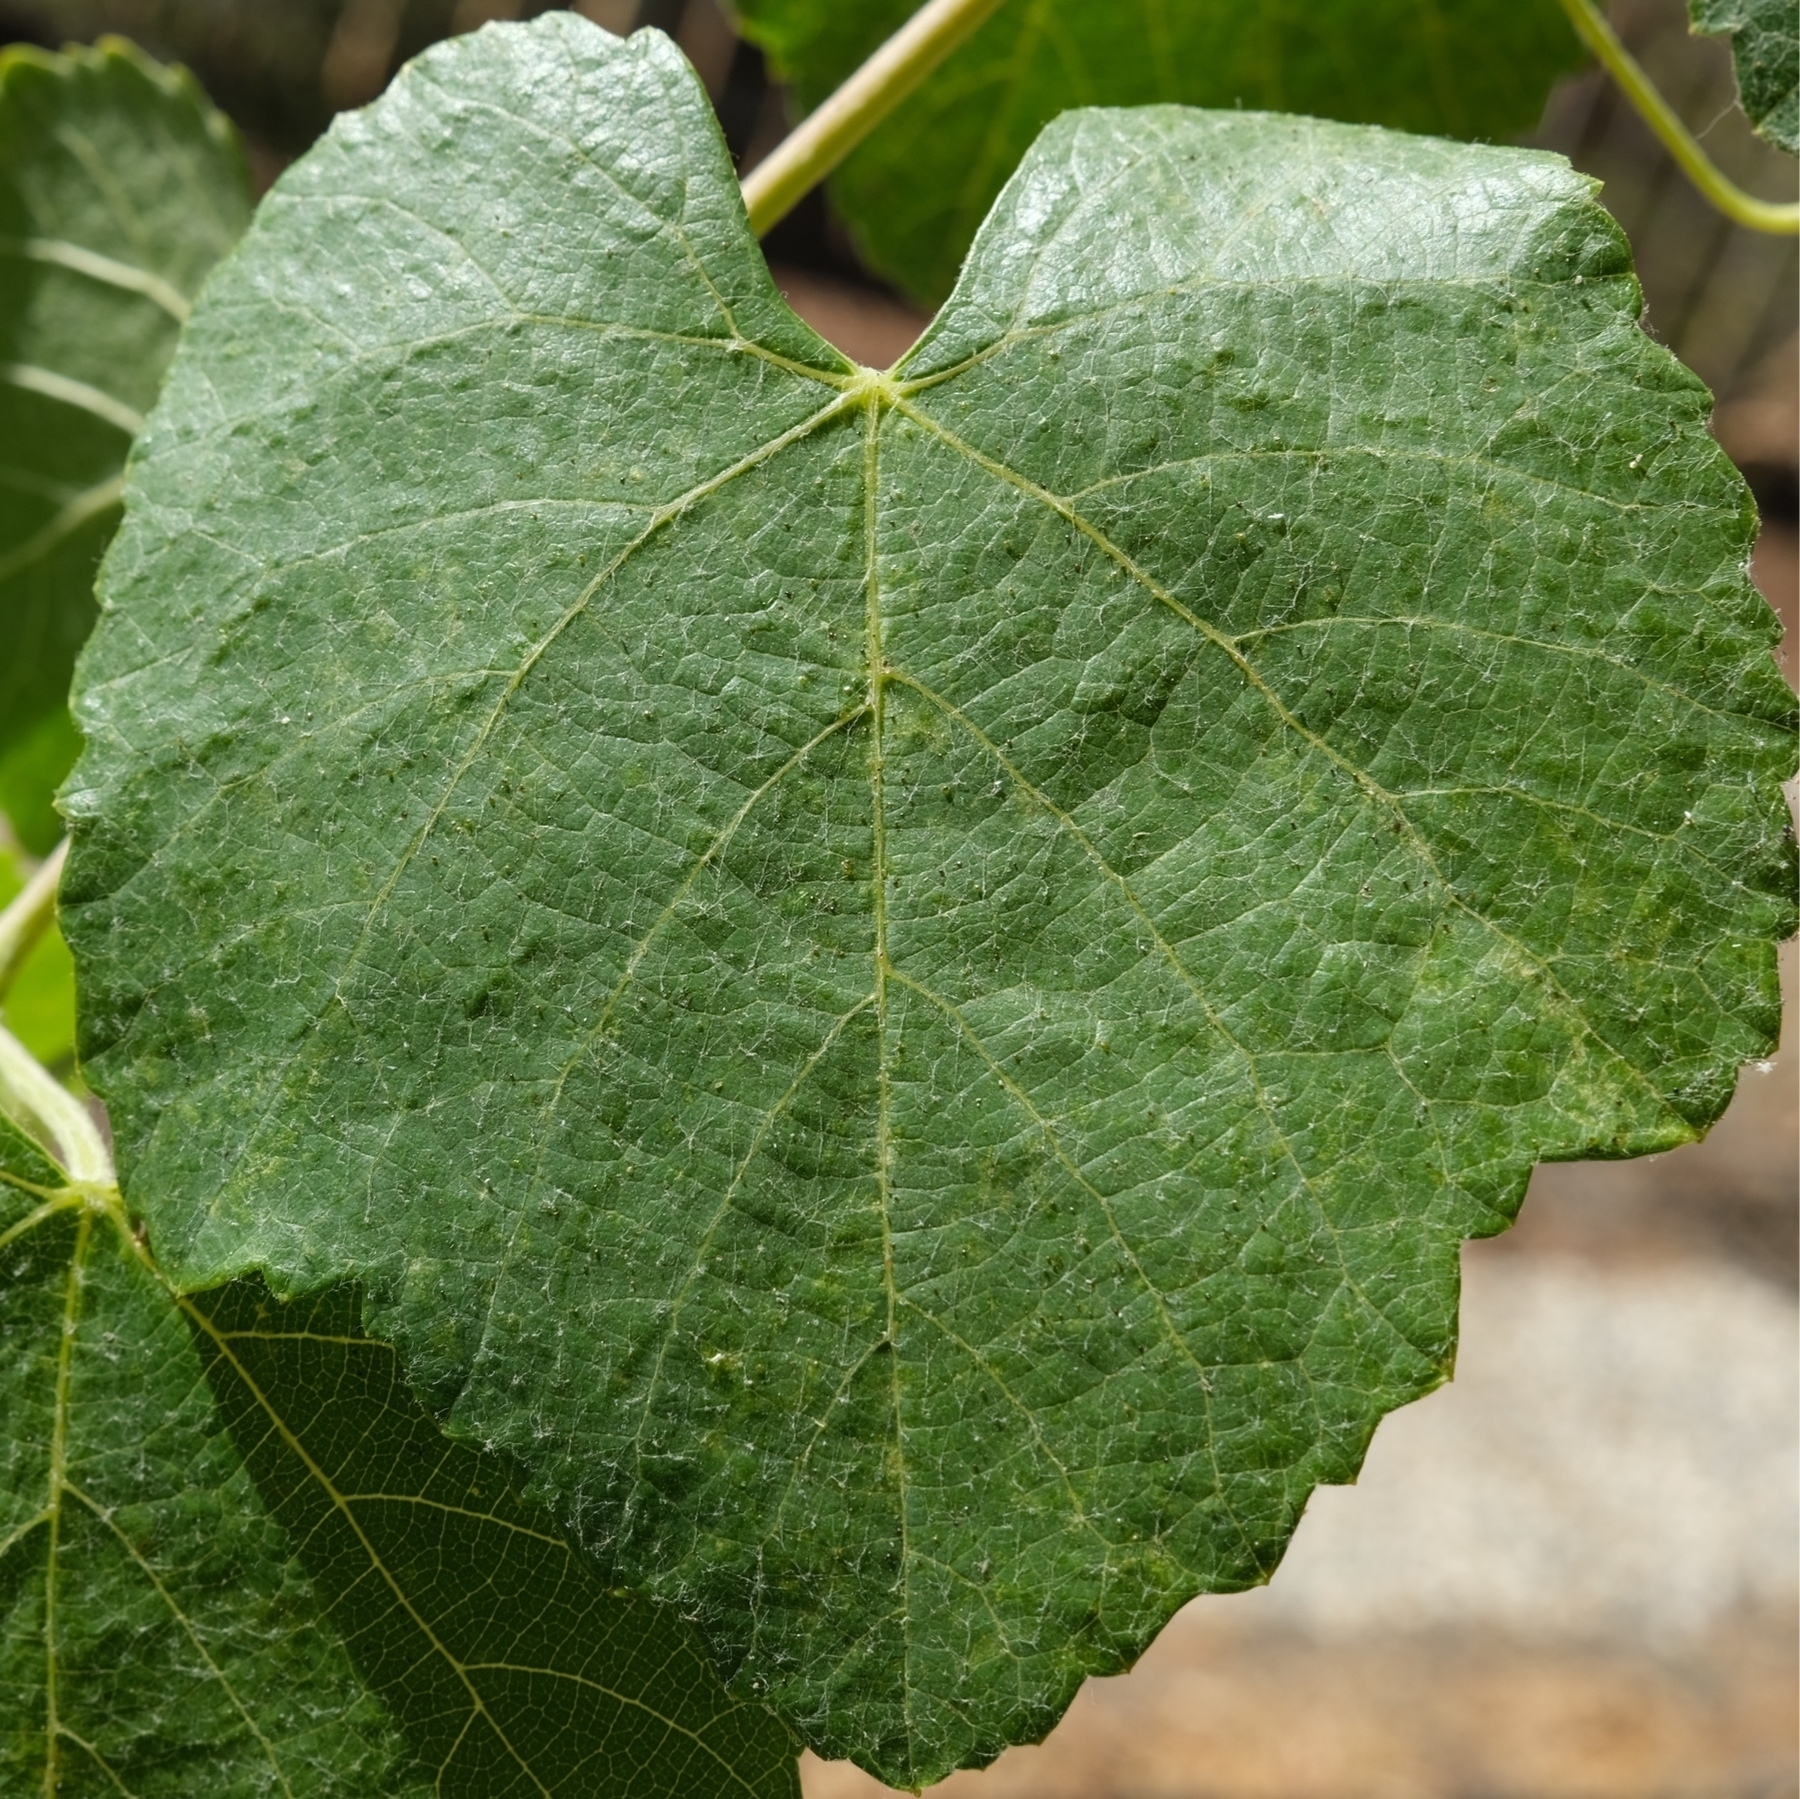 green, live grape leaf